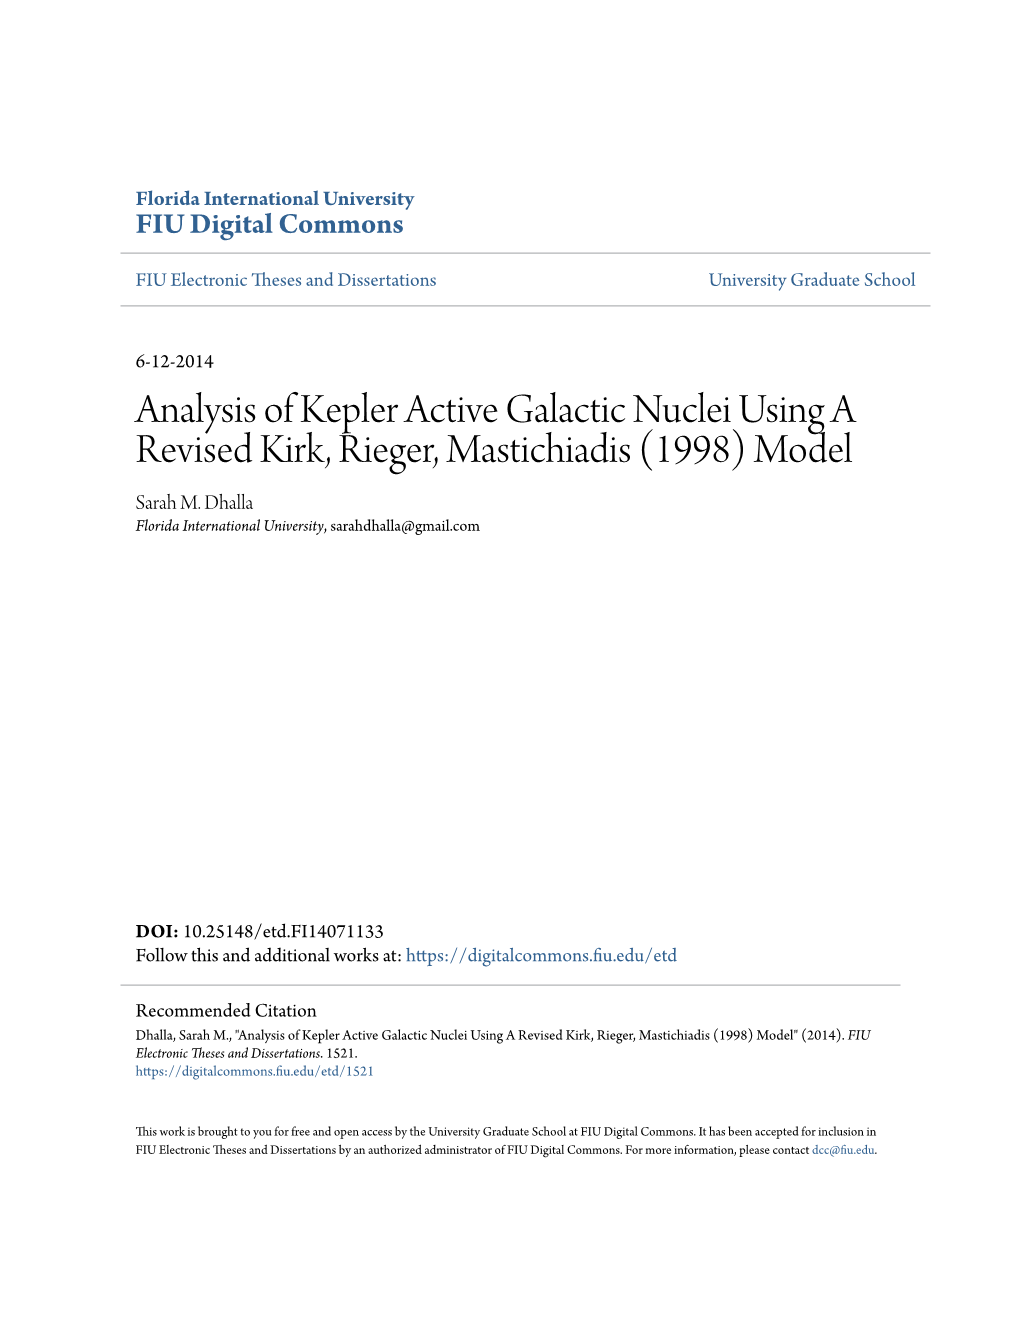 Analysis of Kepler Active Galactic Nuclei Using a Revised Kirk, Rieger, Mastichiadis (1998) Model Sarah M